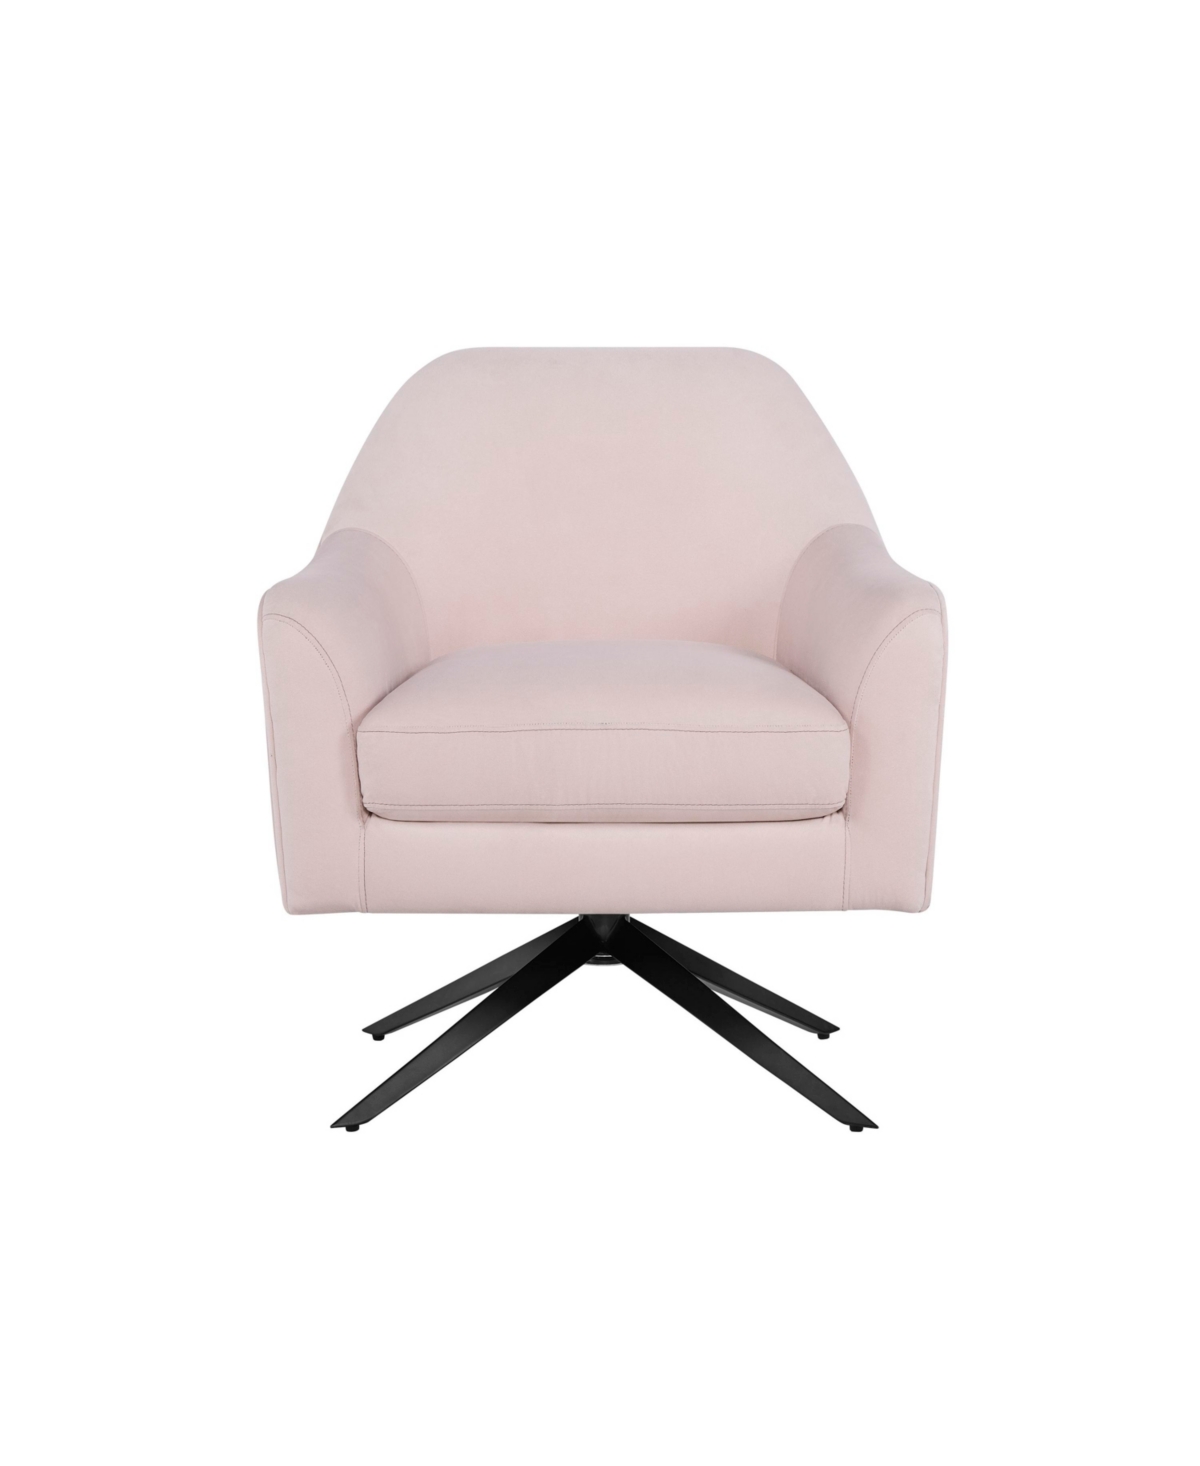 Lifestyle Solutions 29.1" Velvet Gunnar Swivel Accent Chair In Blush